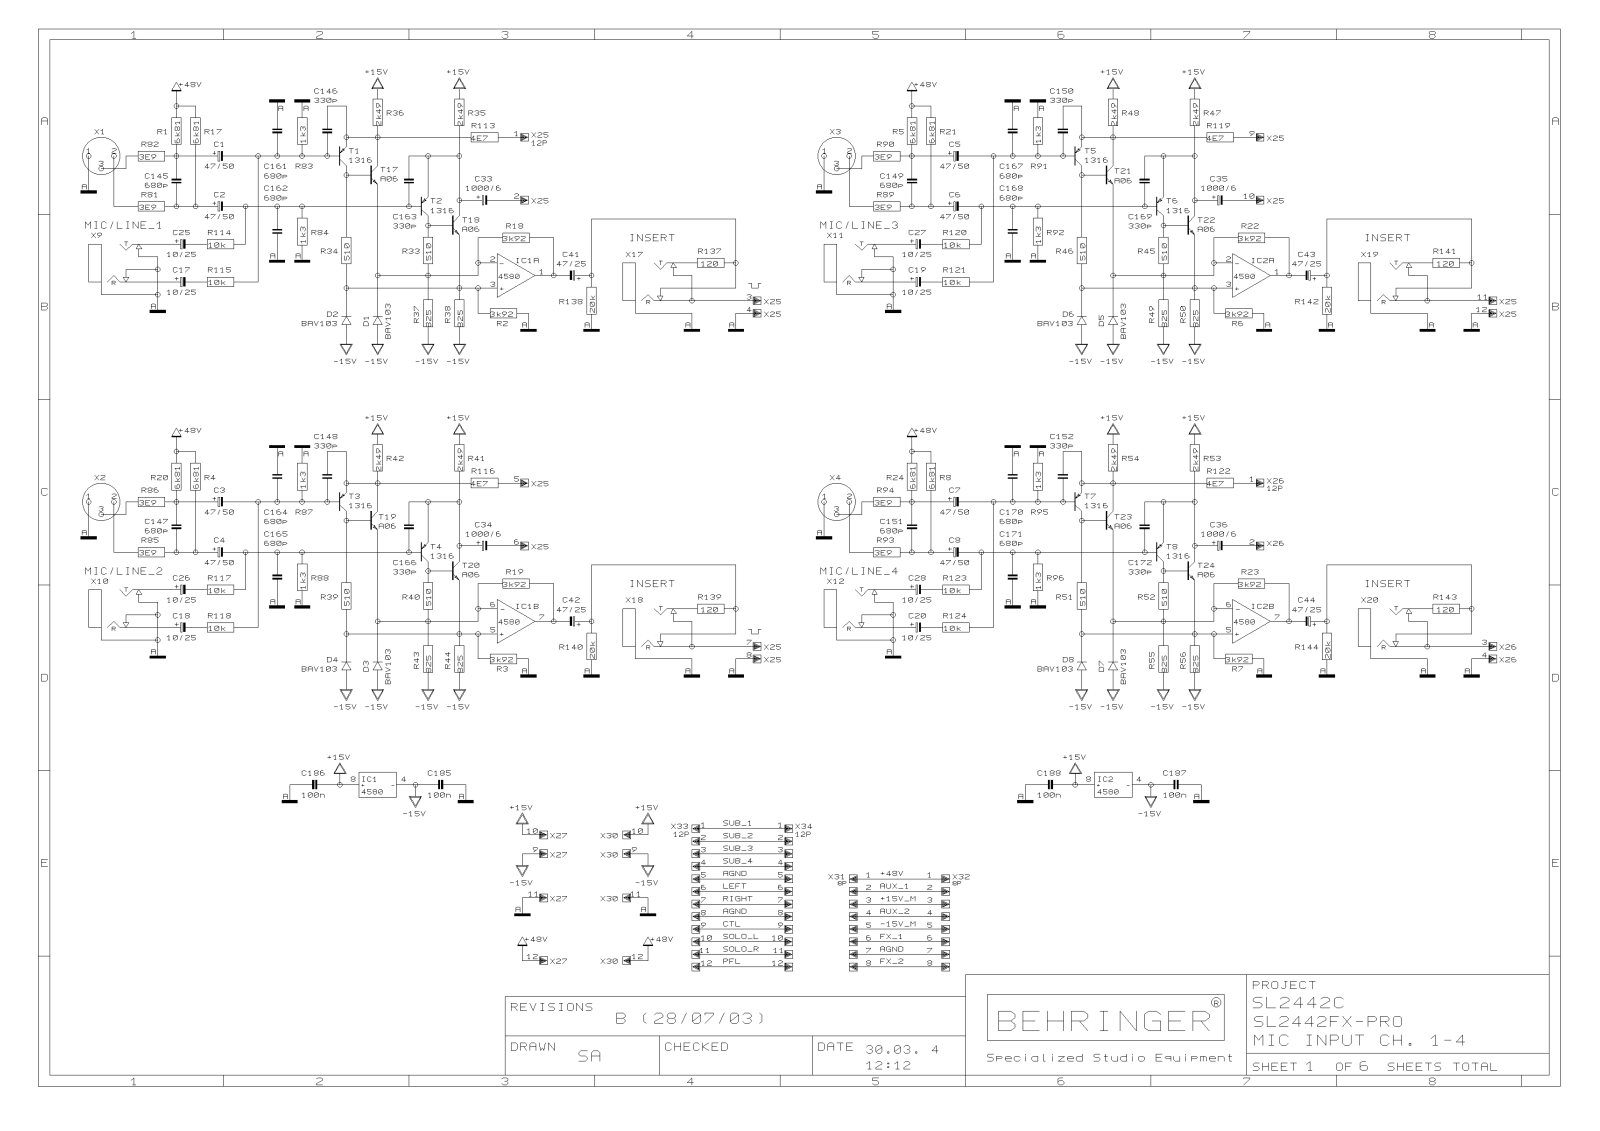 Behringer SL-2442-FXPRO Schematic